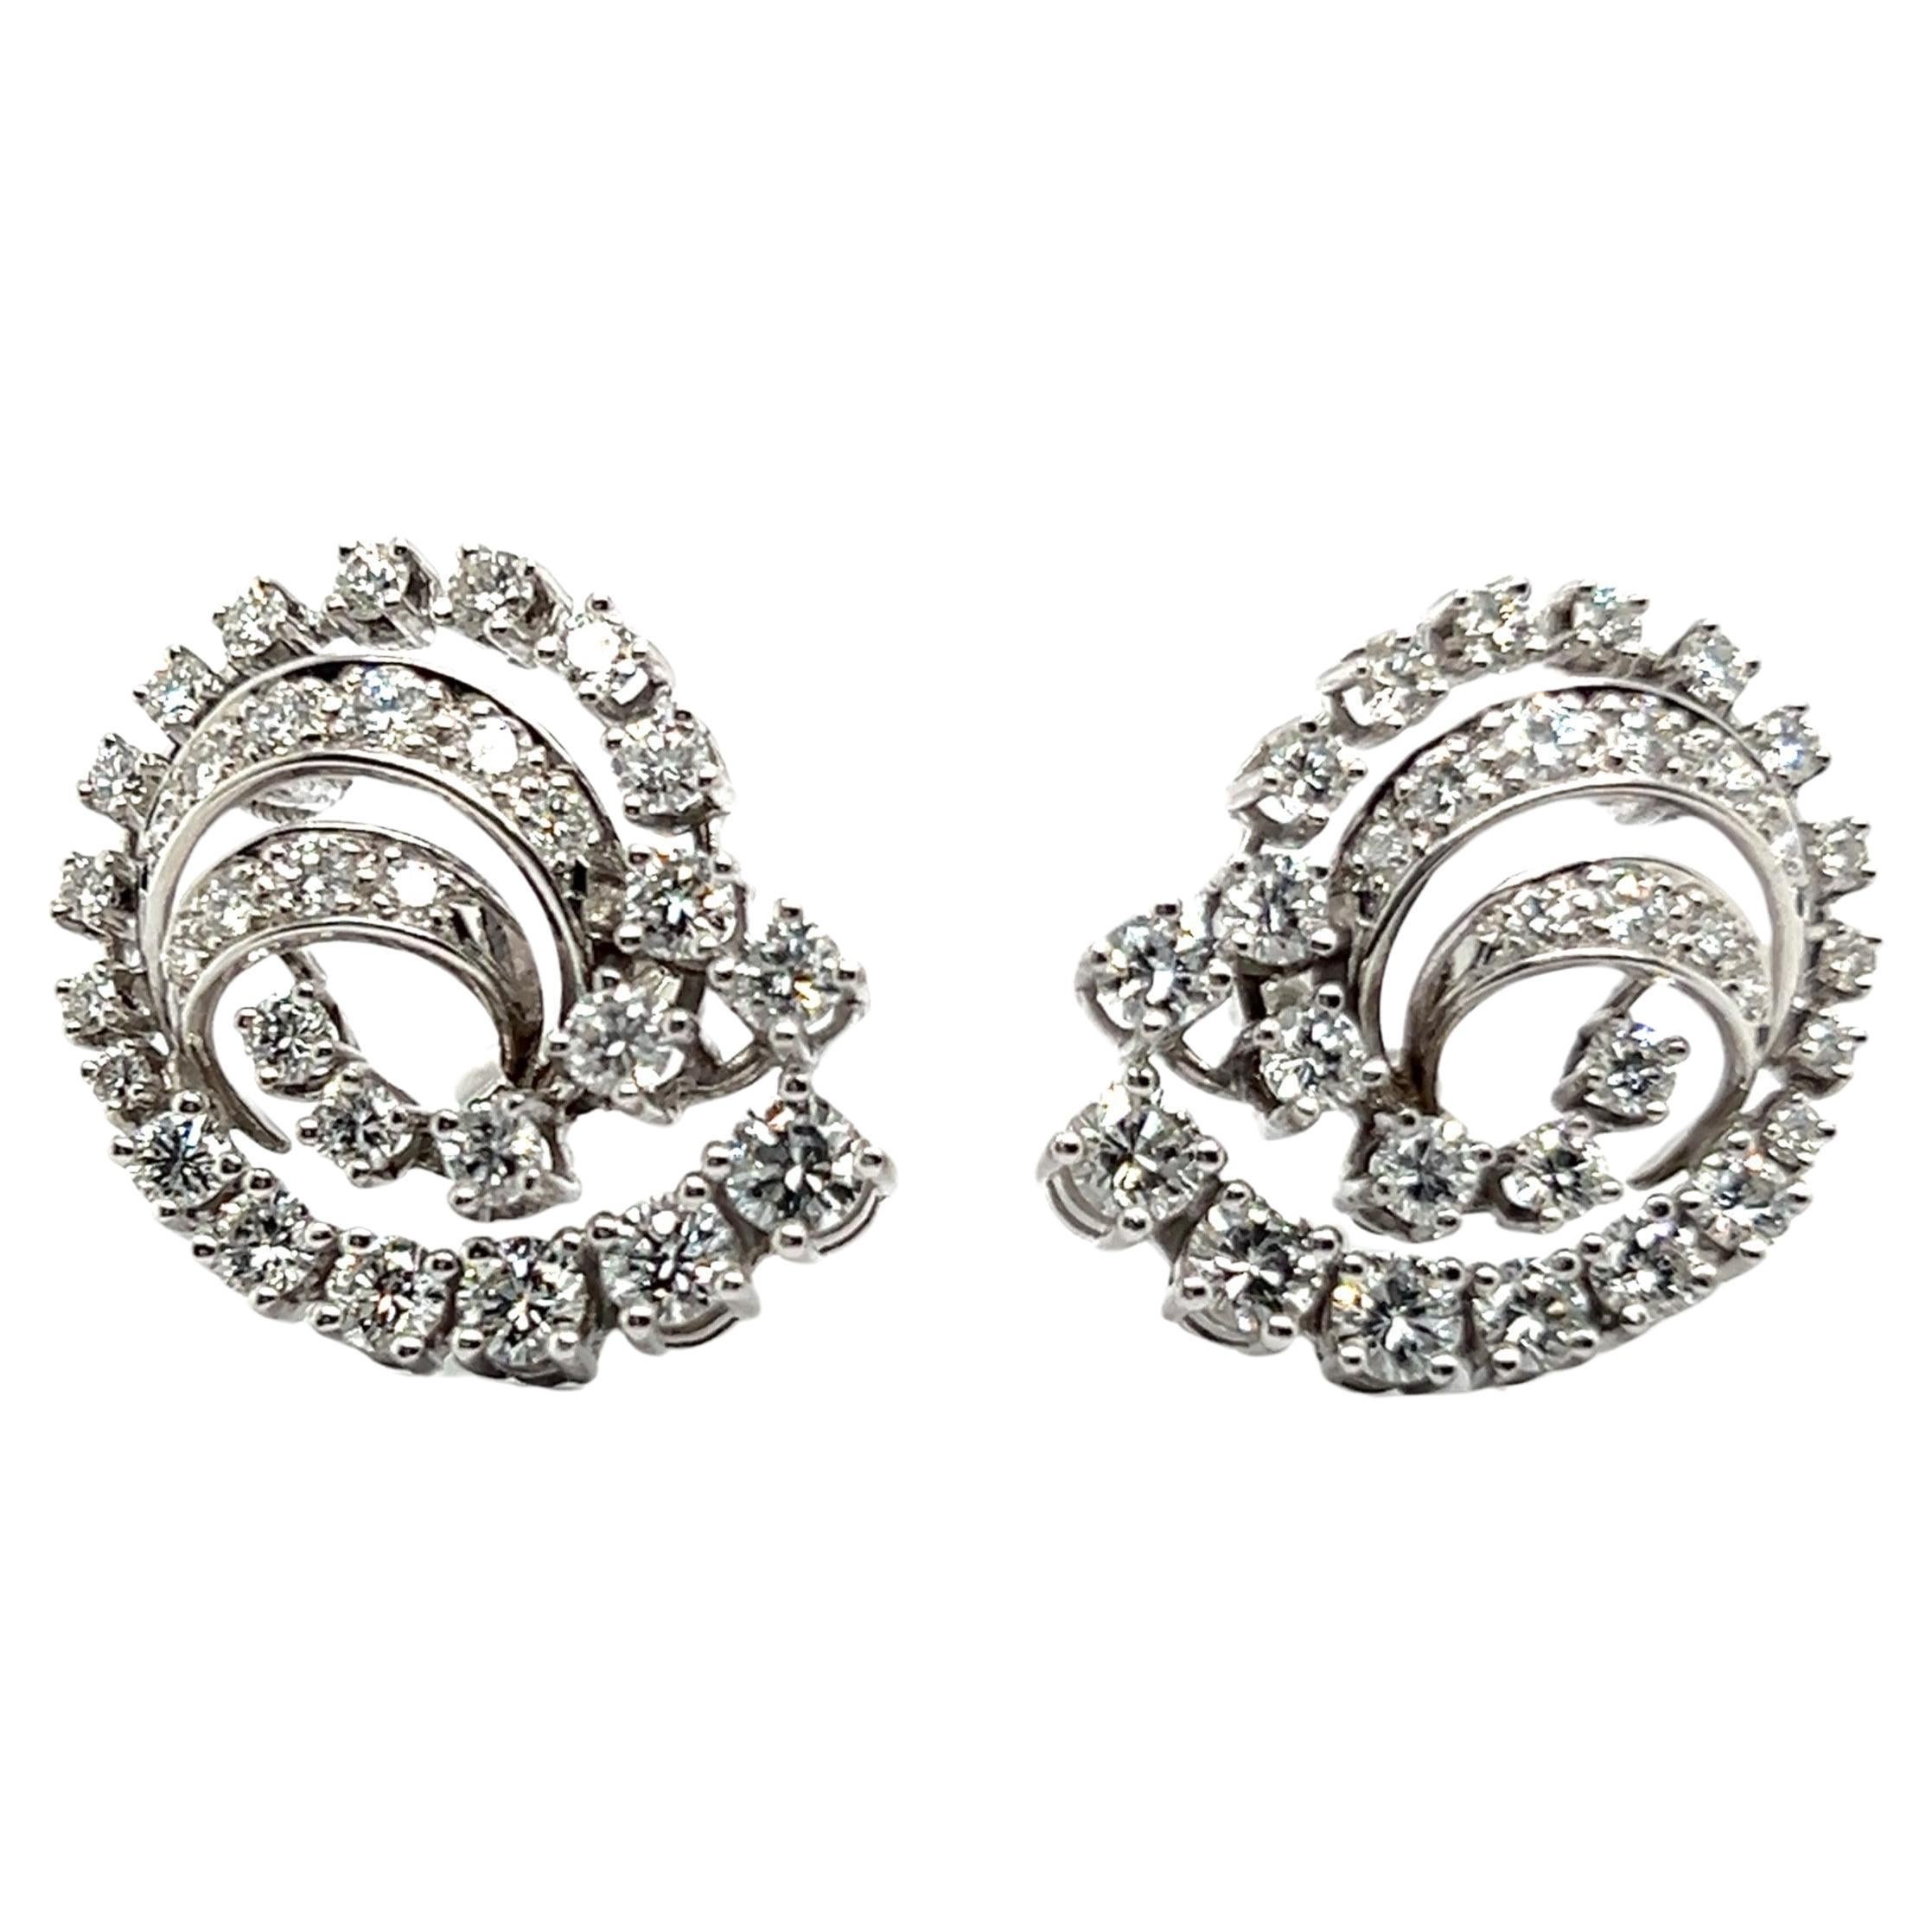 Divine Earrings with Diamonds in 18 Karat White Gold